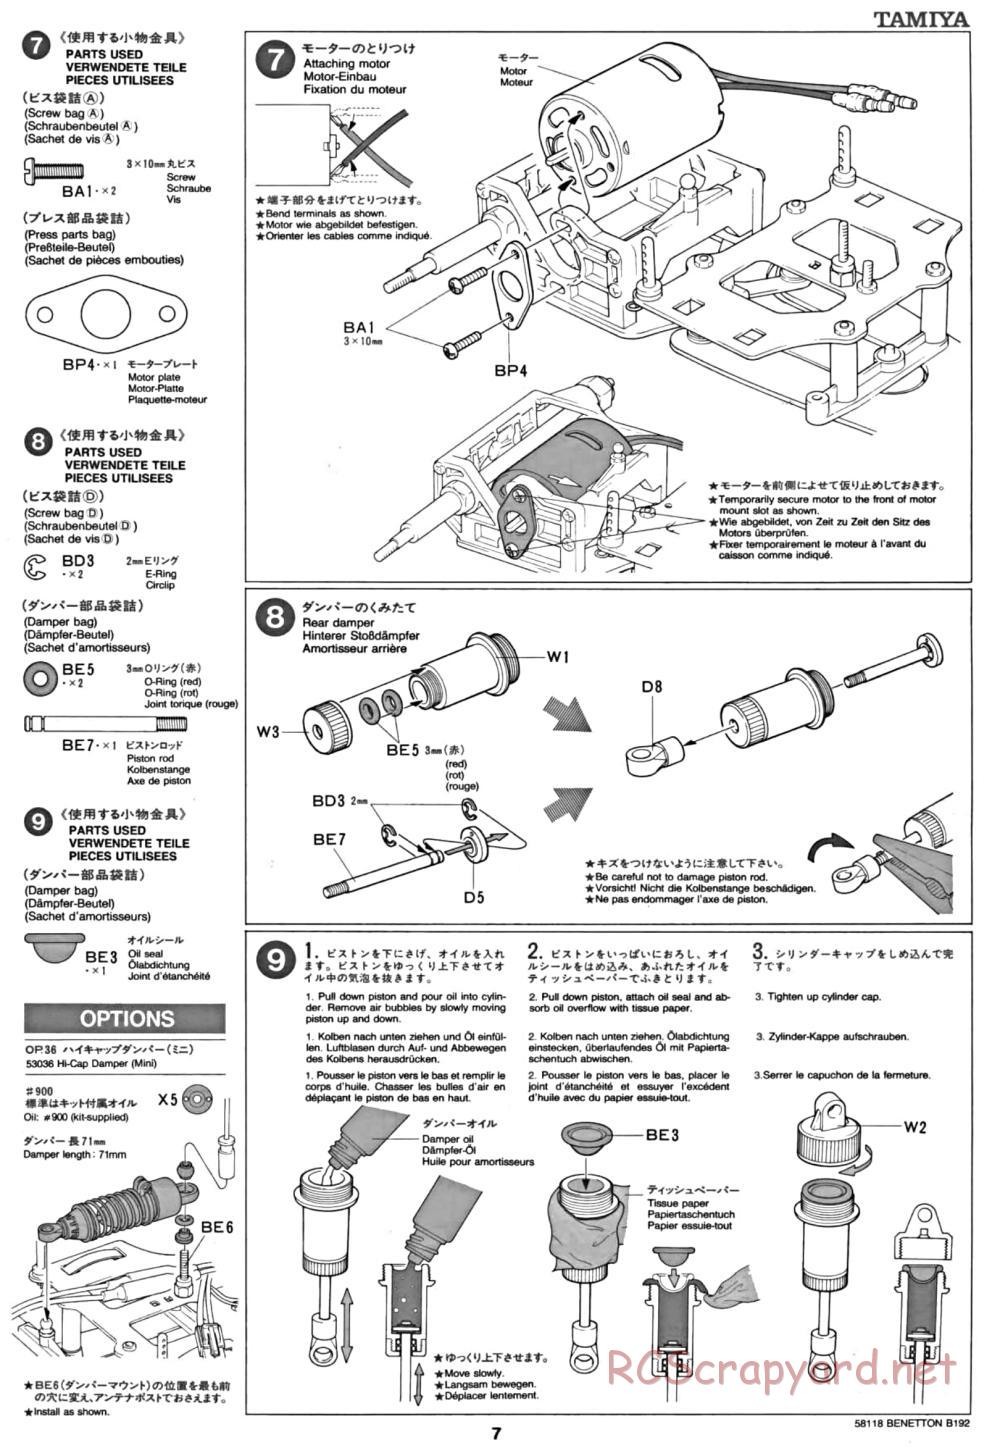 Tamiya - Benetton B192 - F102 Chassis - Manual - Page 7